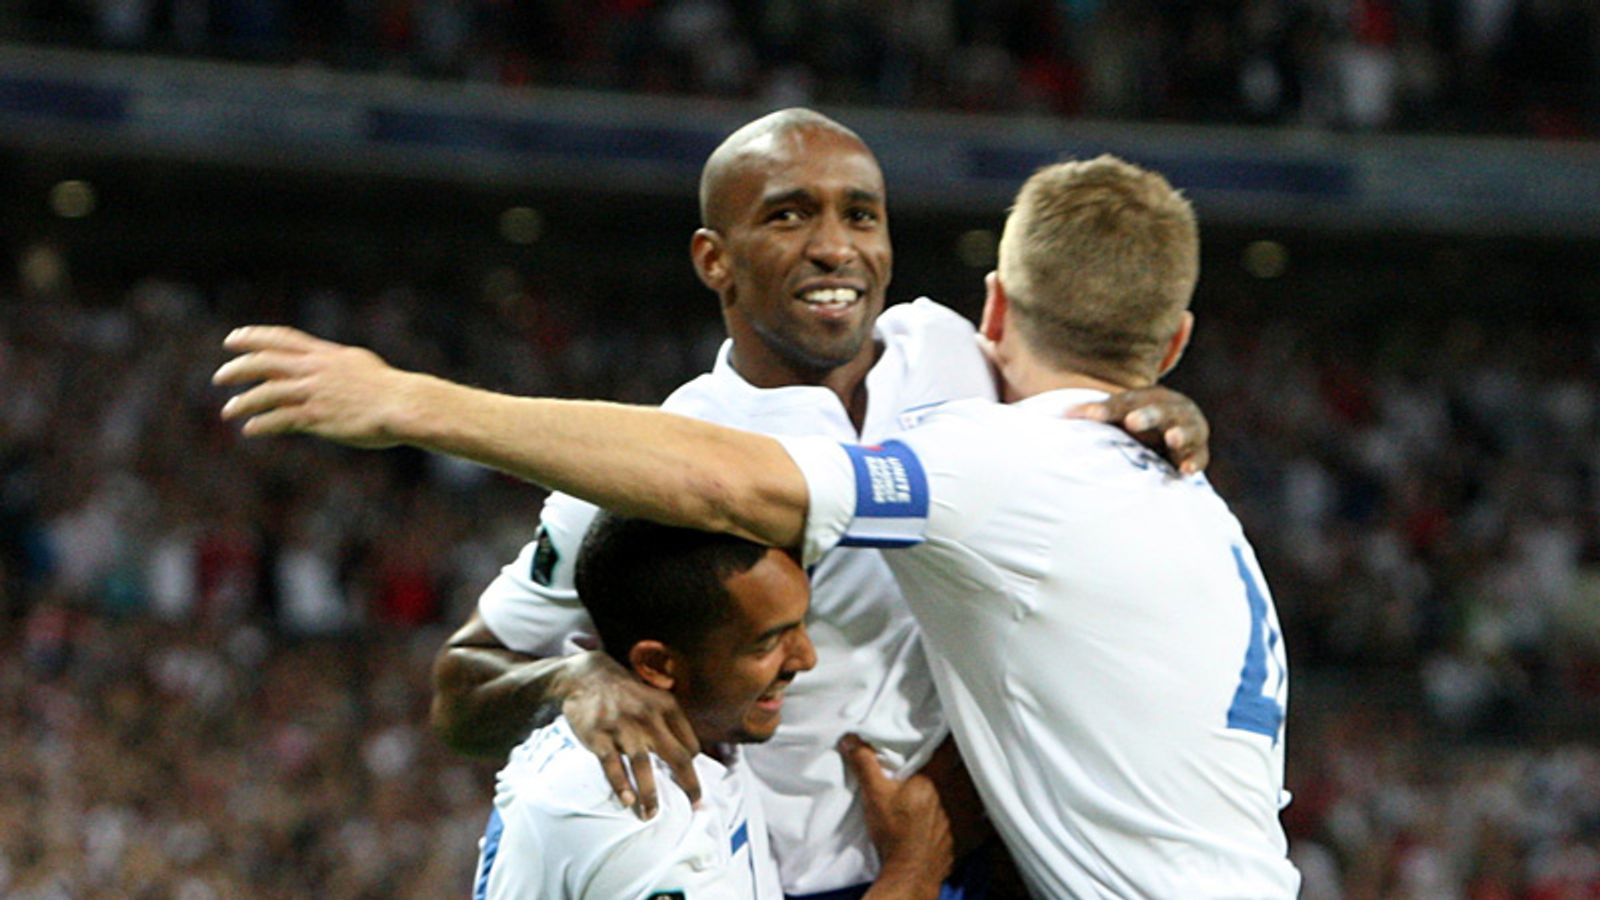 England 4 - 0 Bulgaria - Match Report & Highlights